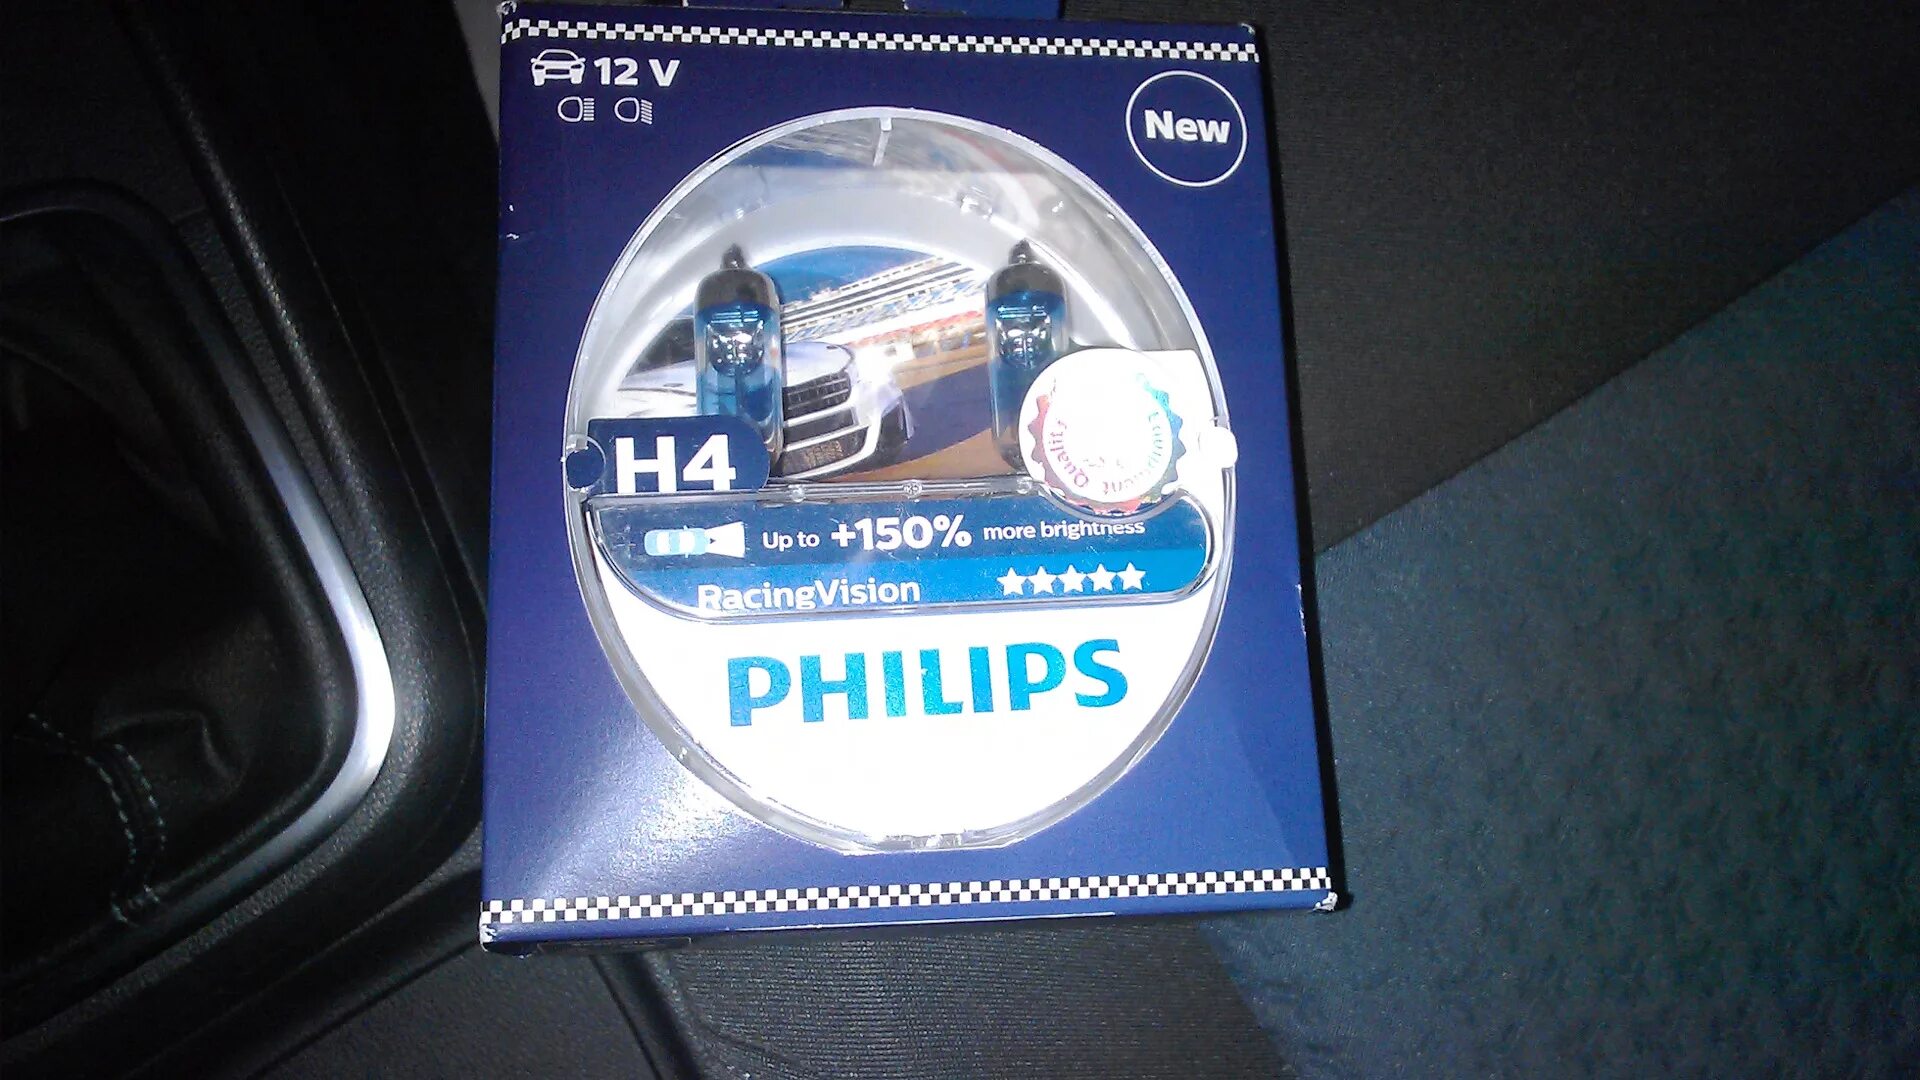 Philips Racing Vision +150 h11. Лампа h4 на поло седан 2013. VW Polo sedan диодные лампы Philips h4. Лучшие лампы h4 для Фольксваген поло седан. Лампа ближнего света филипс